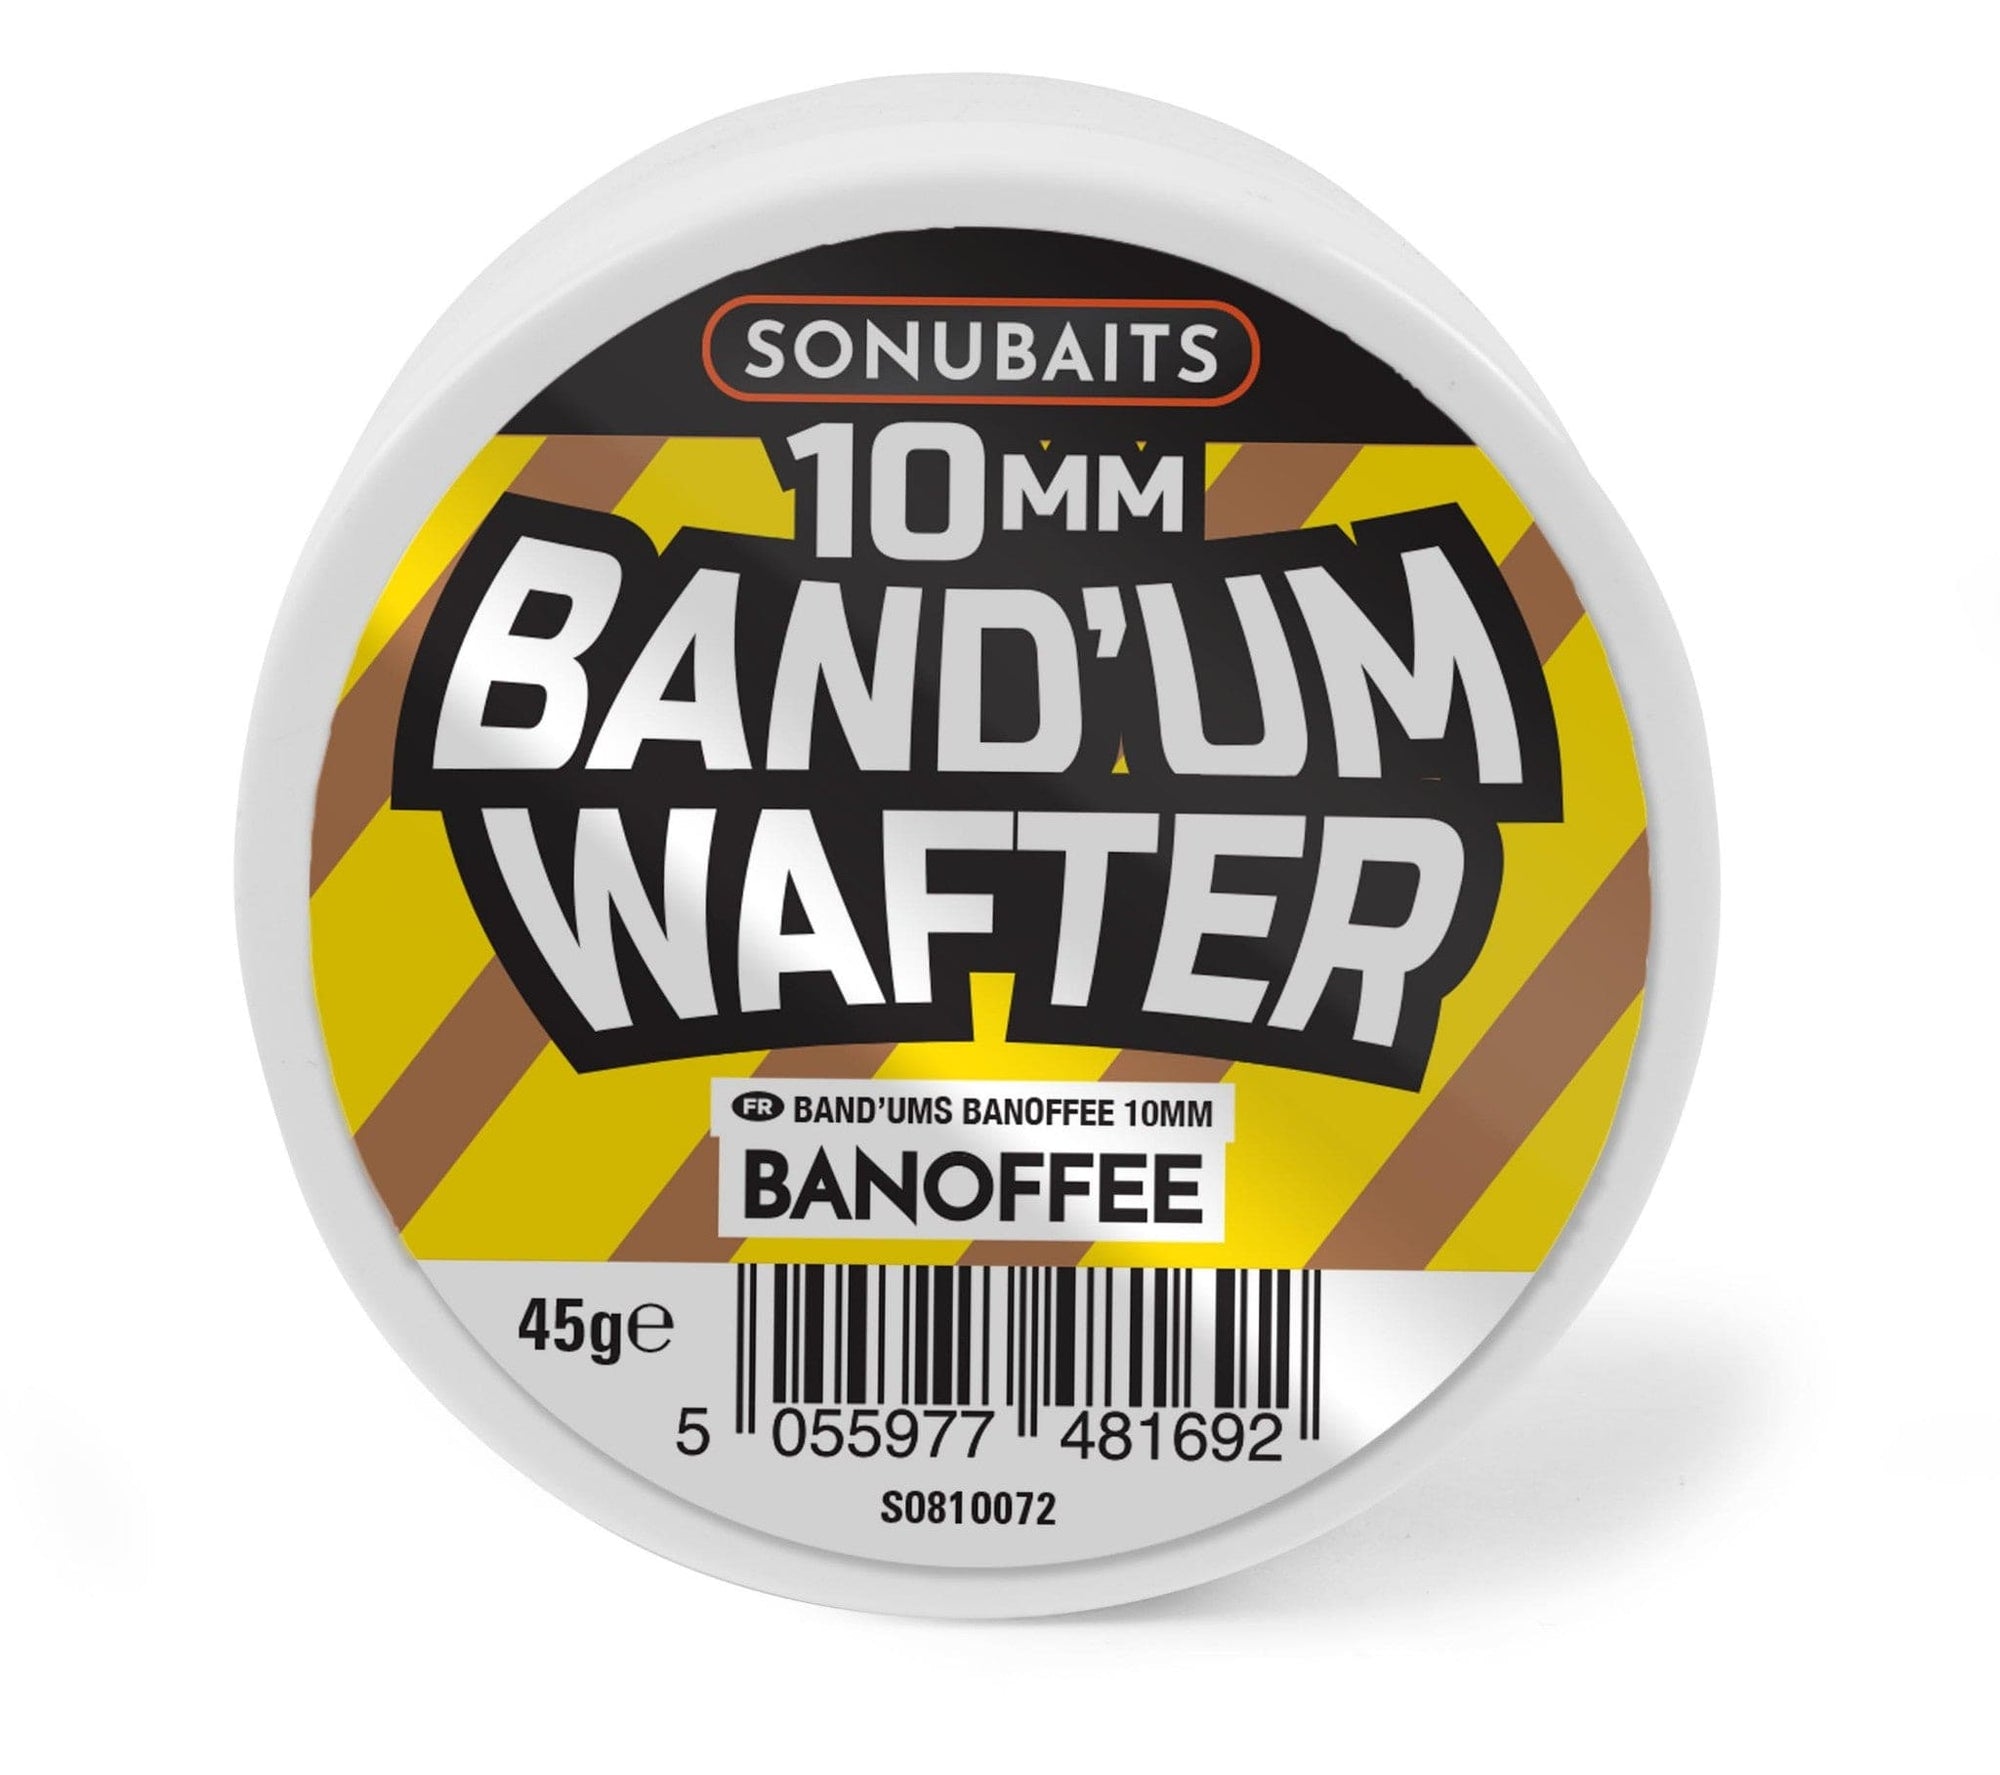 Sonubaits Band'um Wafters - Banoffee 10mm.